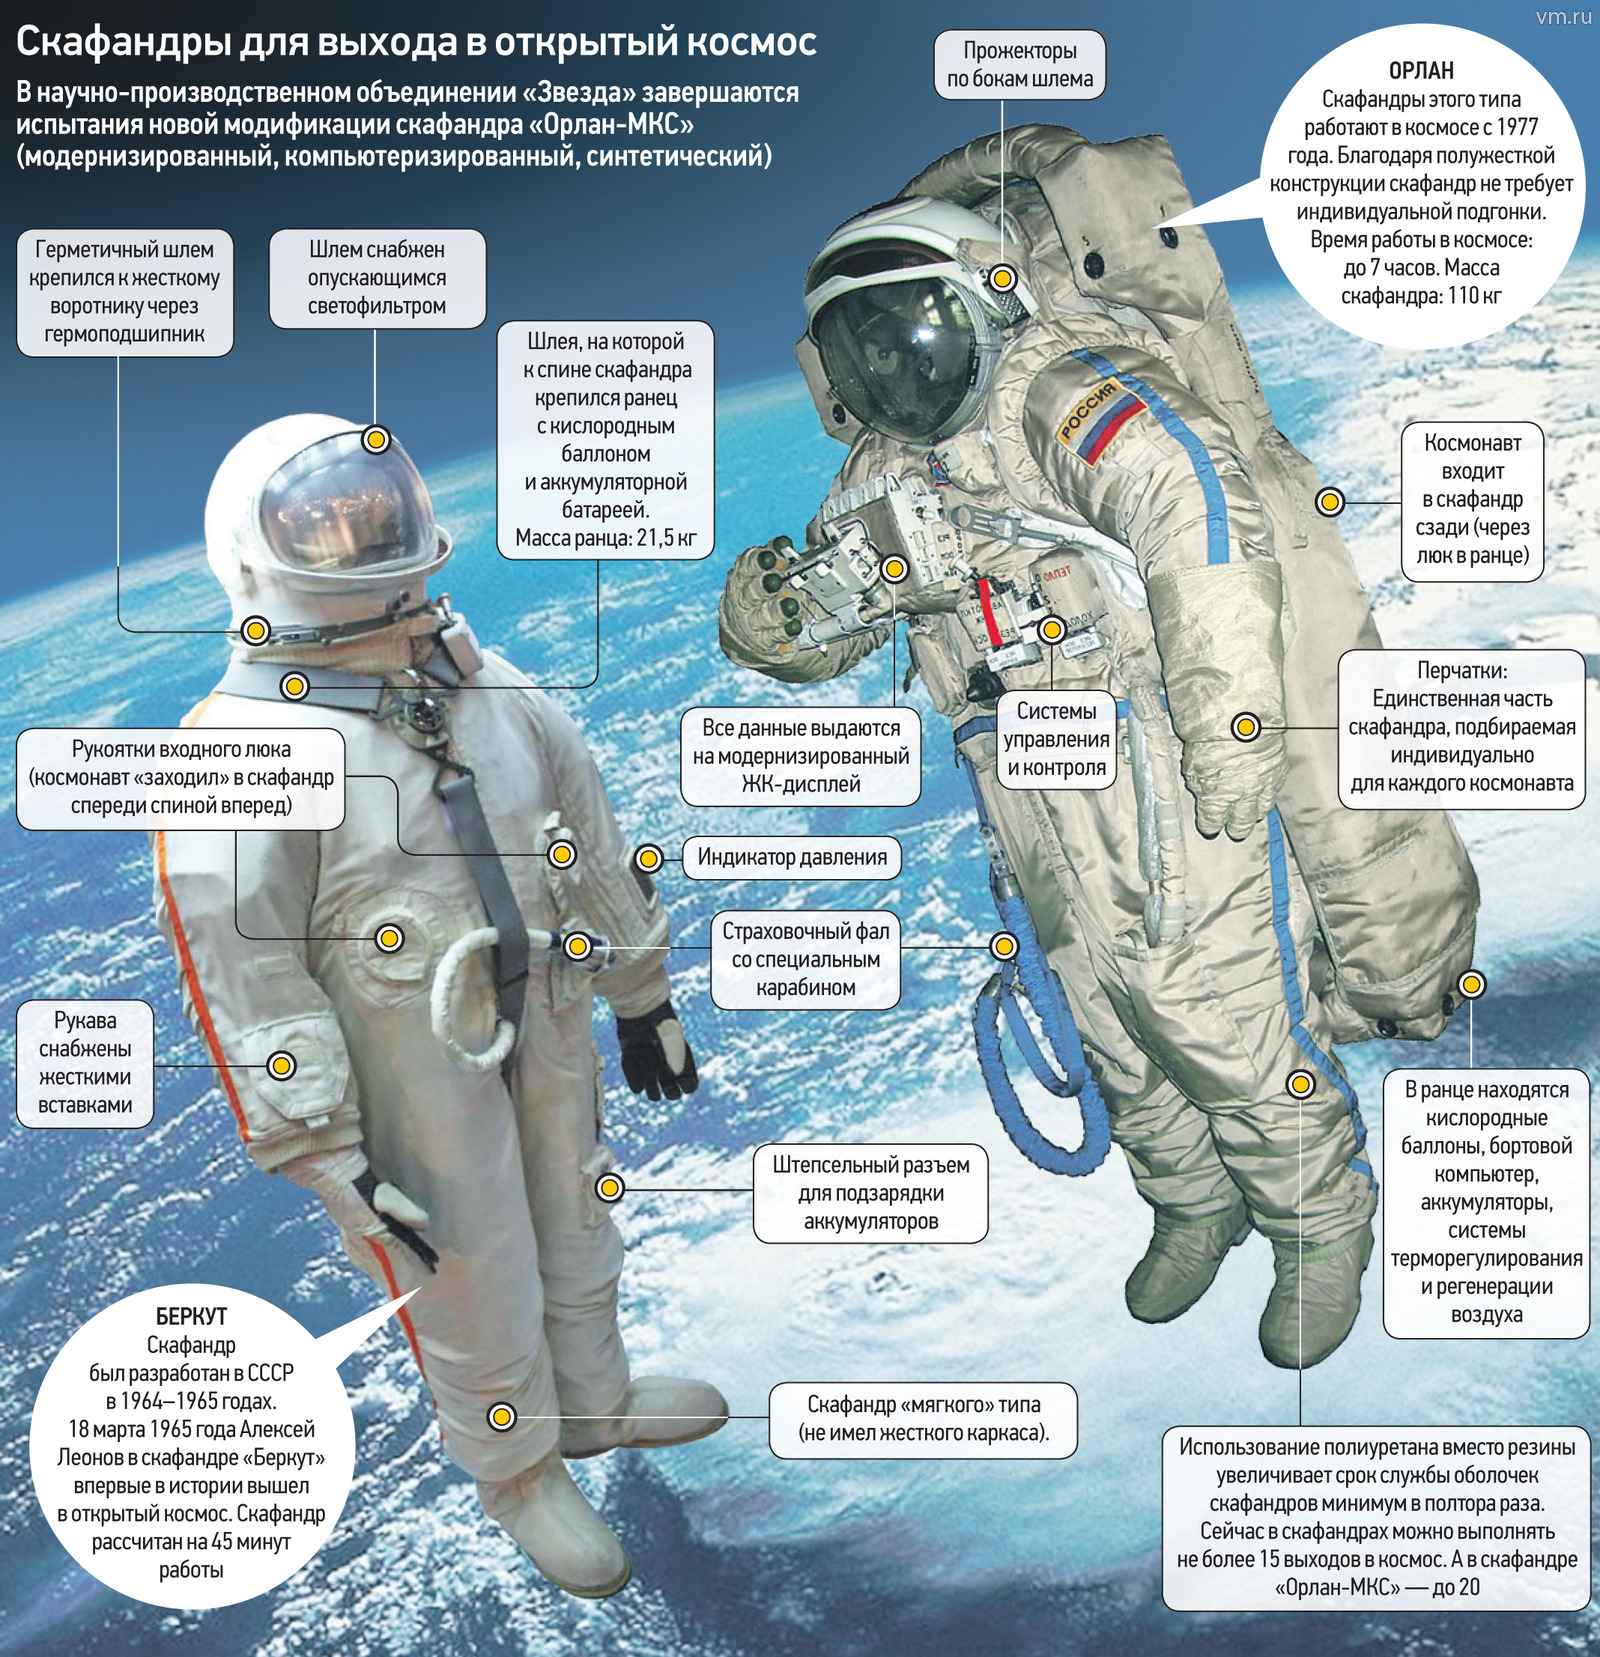 Текст скафандр. Орлан костюм Космонавта. Из чего состоит скафандр Космонавта.